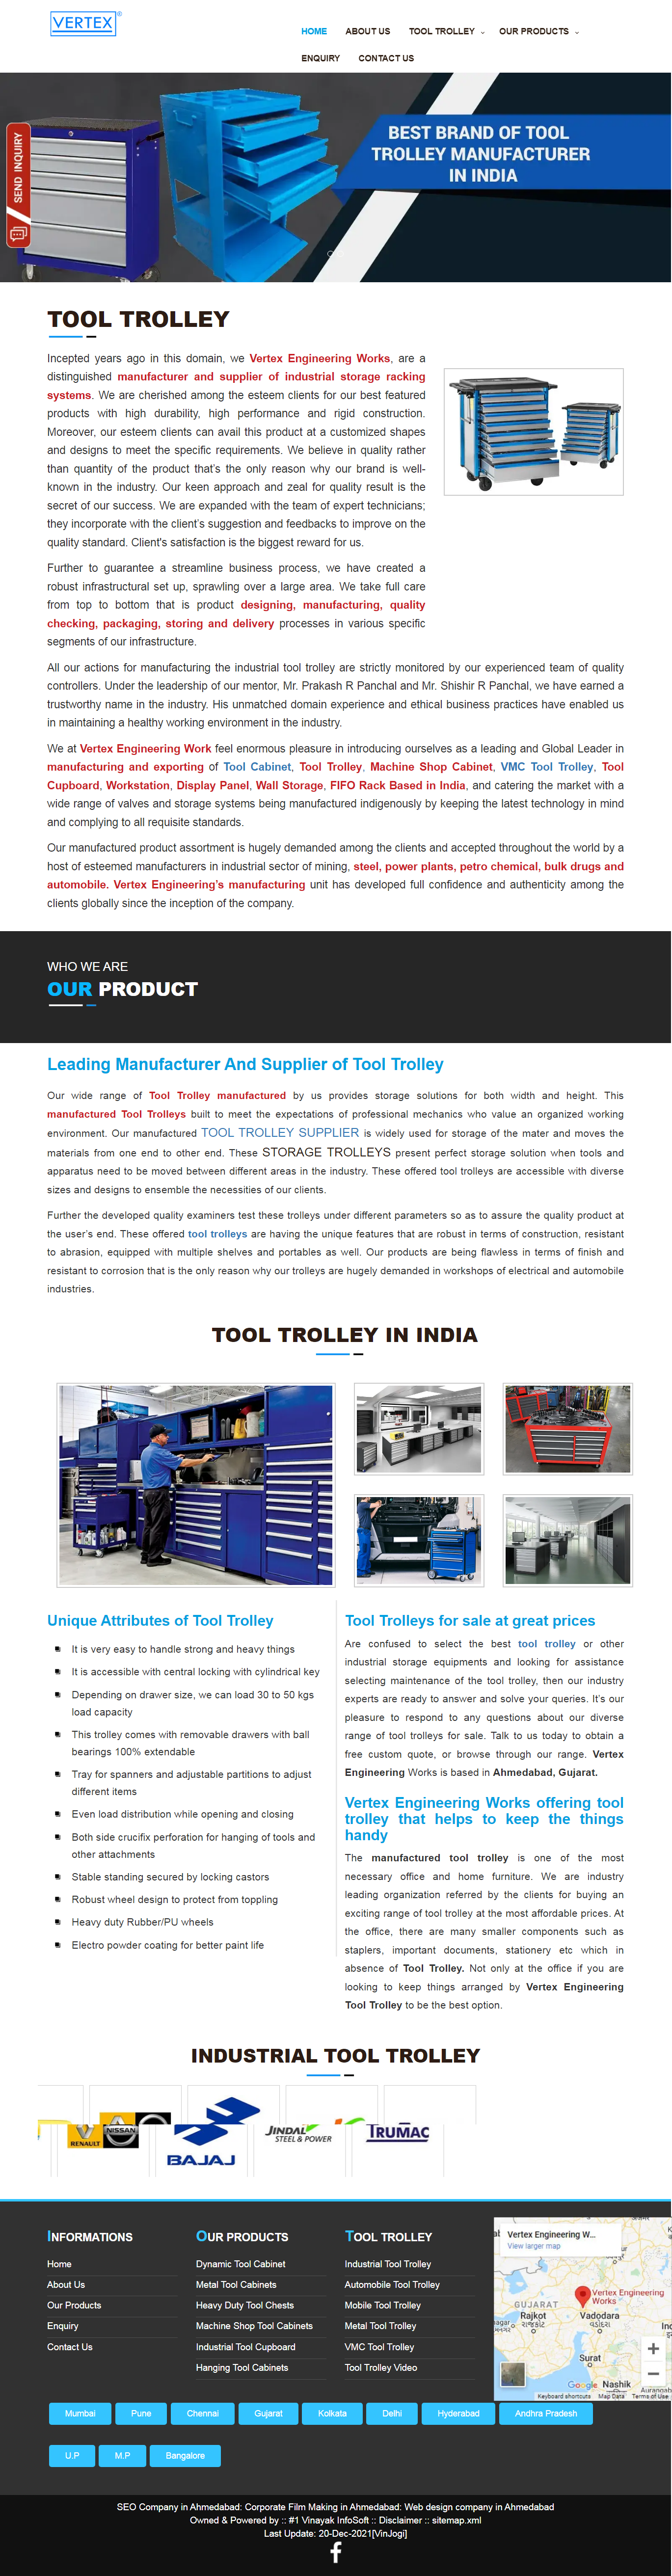 Tool Trolley India